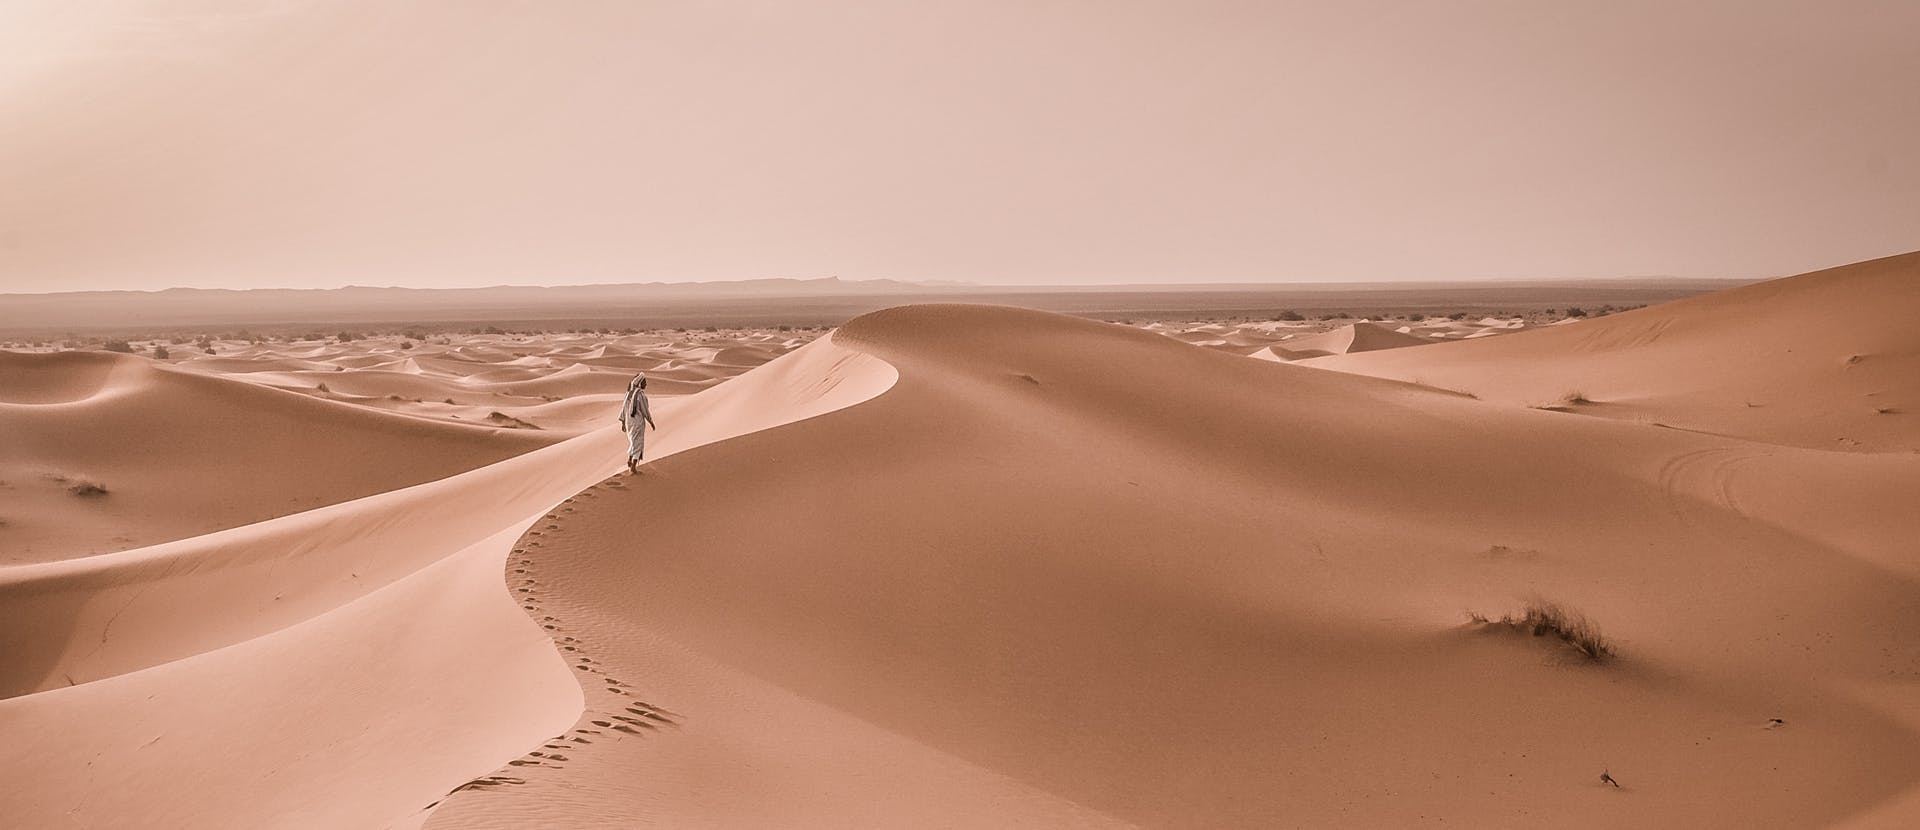 soil sand outdoors nature dune human person desert